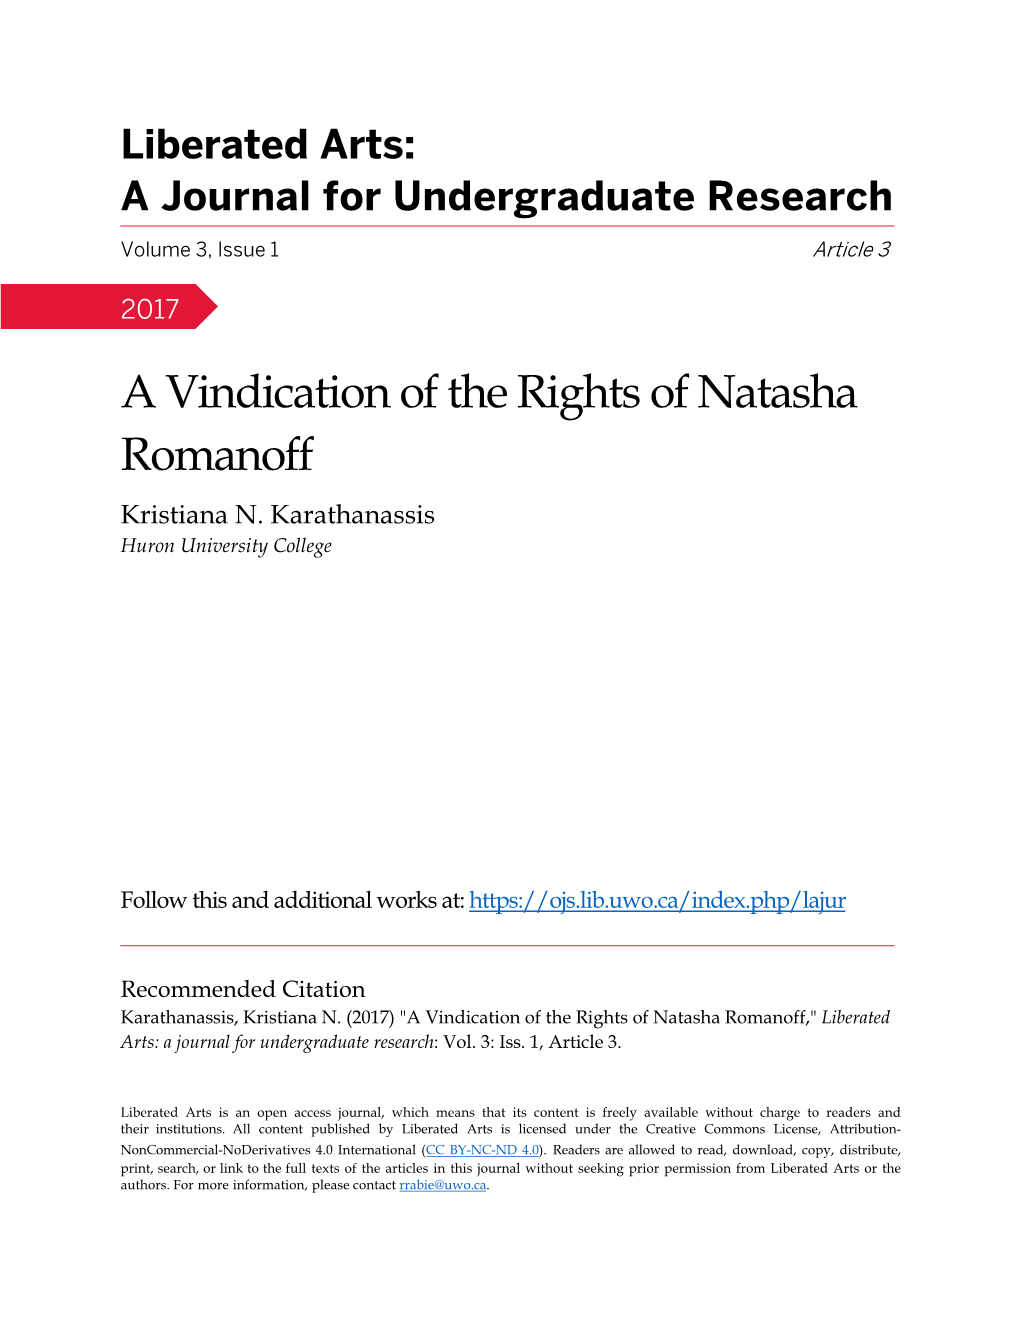 A Vindication of the Rights of Natasha Romanoff Kristiana N